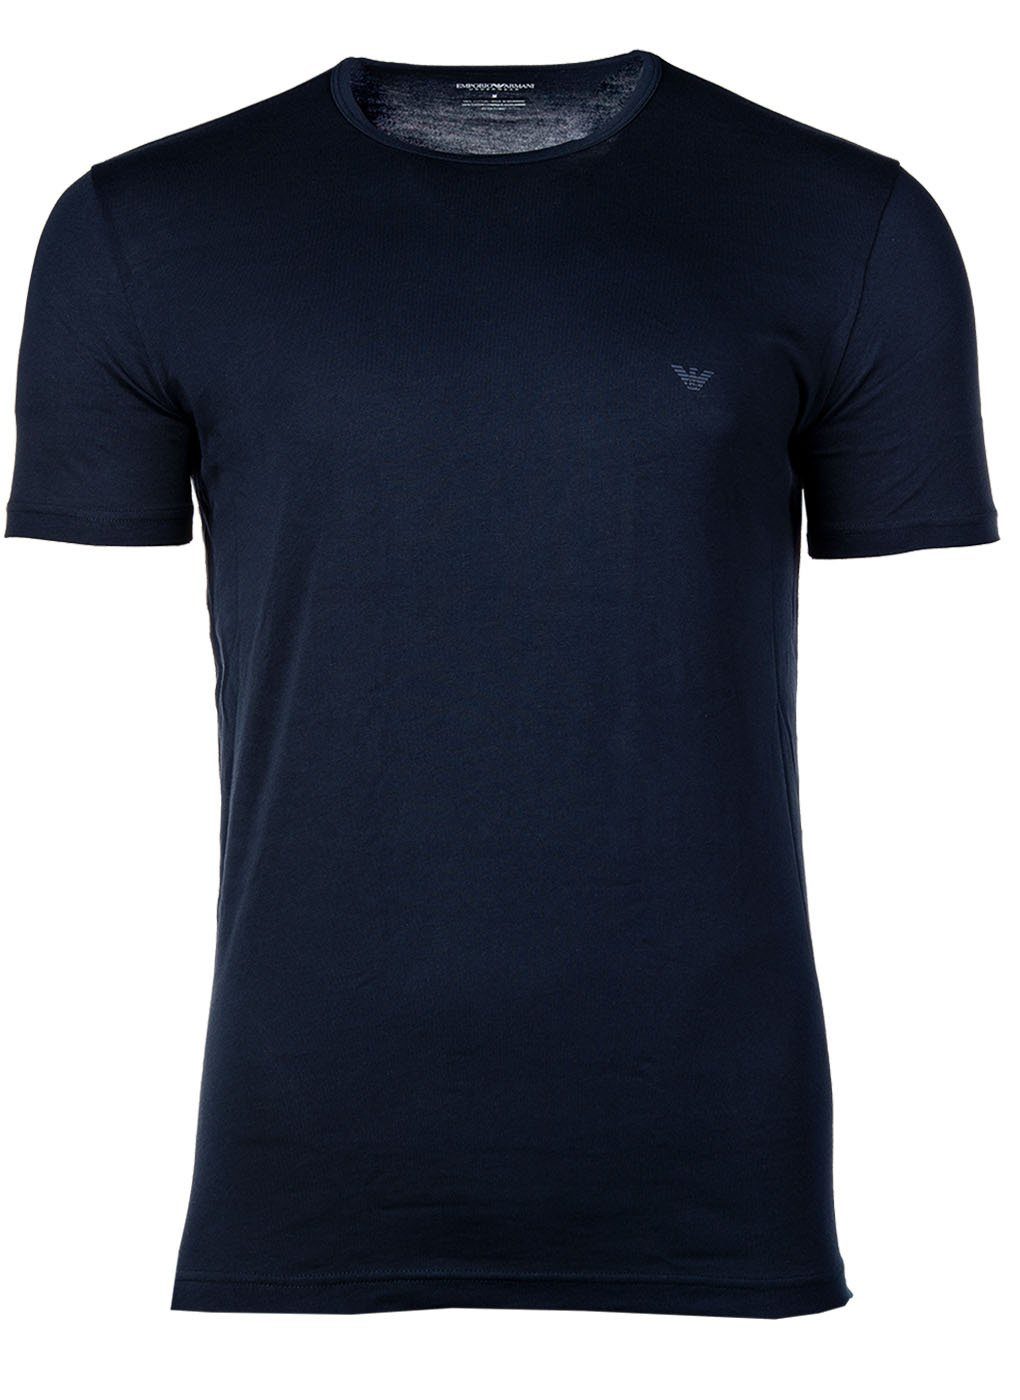 T-Shirt T-Shirt Herren - Emporio Blau/Grau Crew Pack Armani 2er Neck, Rundhals